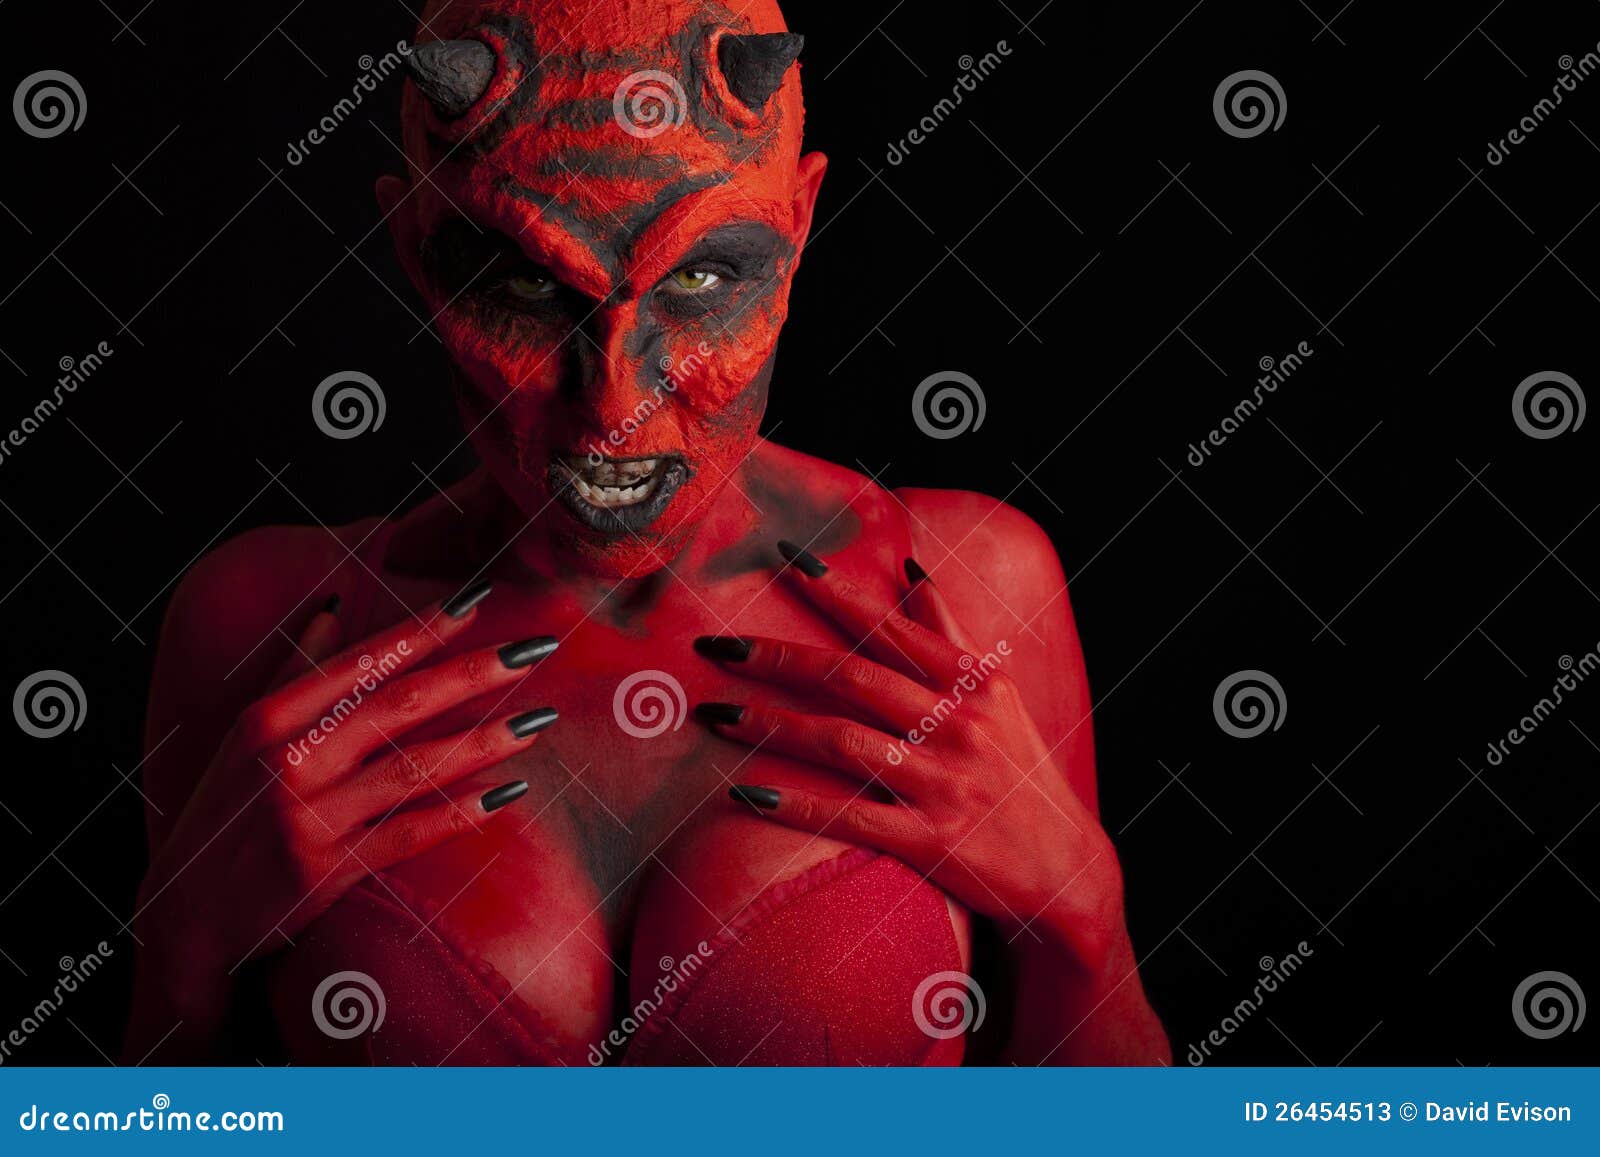 red devil.